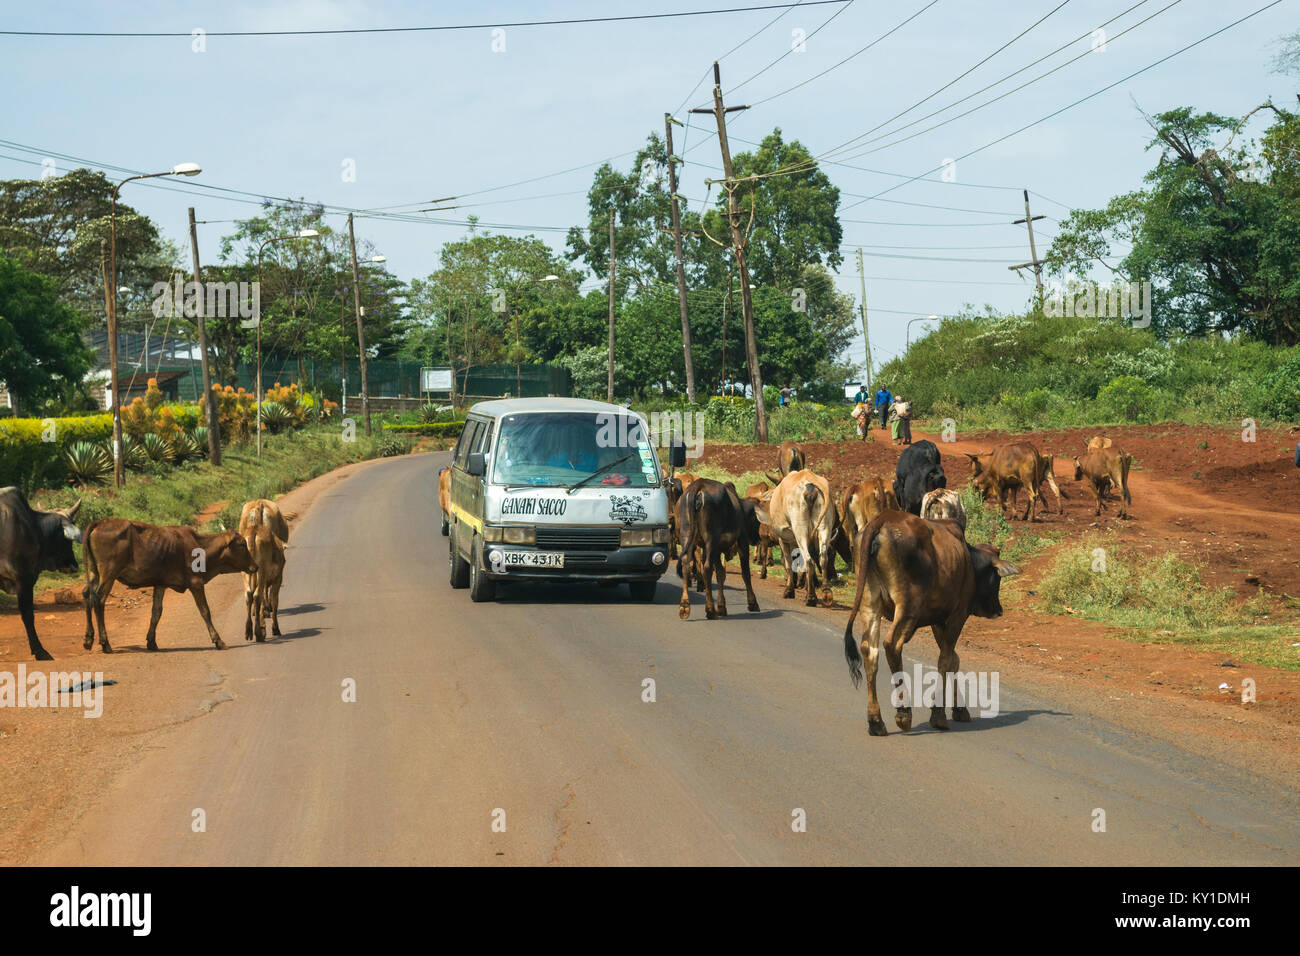 A herd of cows cross a road as a matatu vehicle waits, Kenya, East Africa Stock Photo